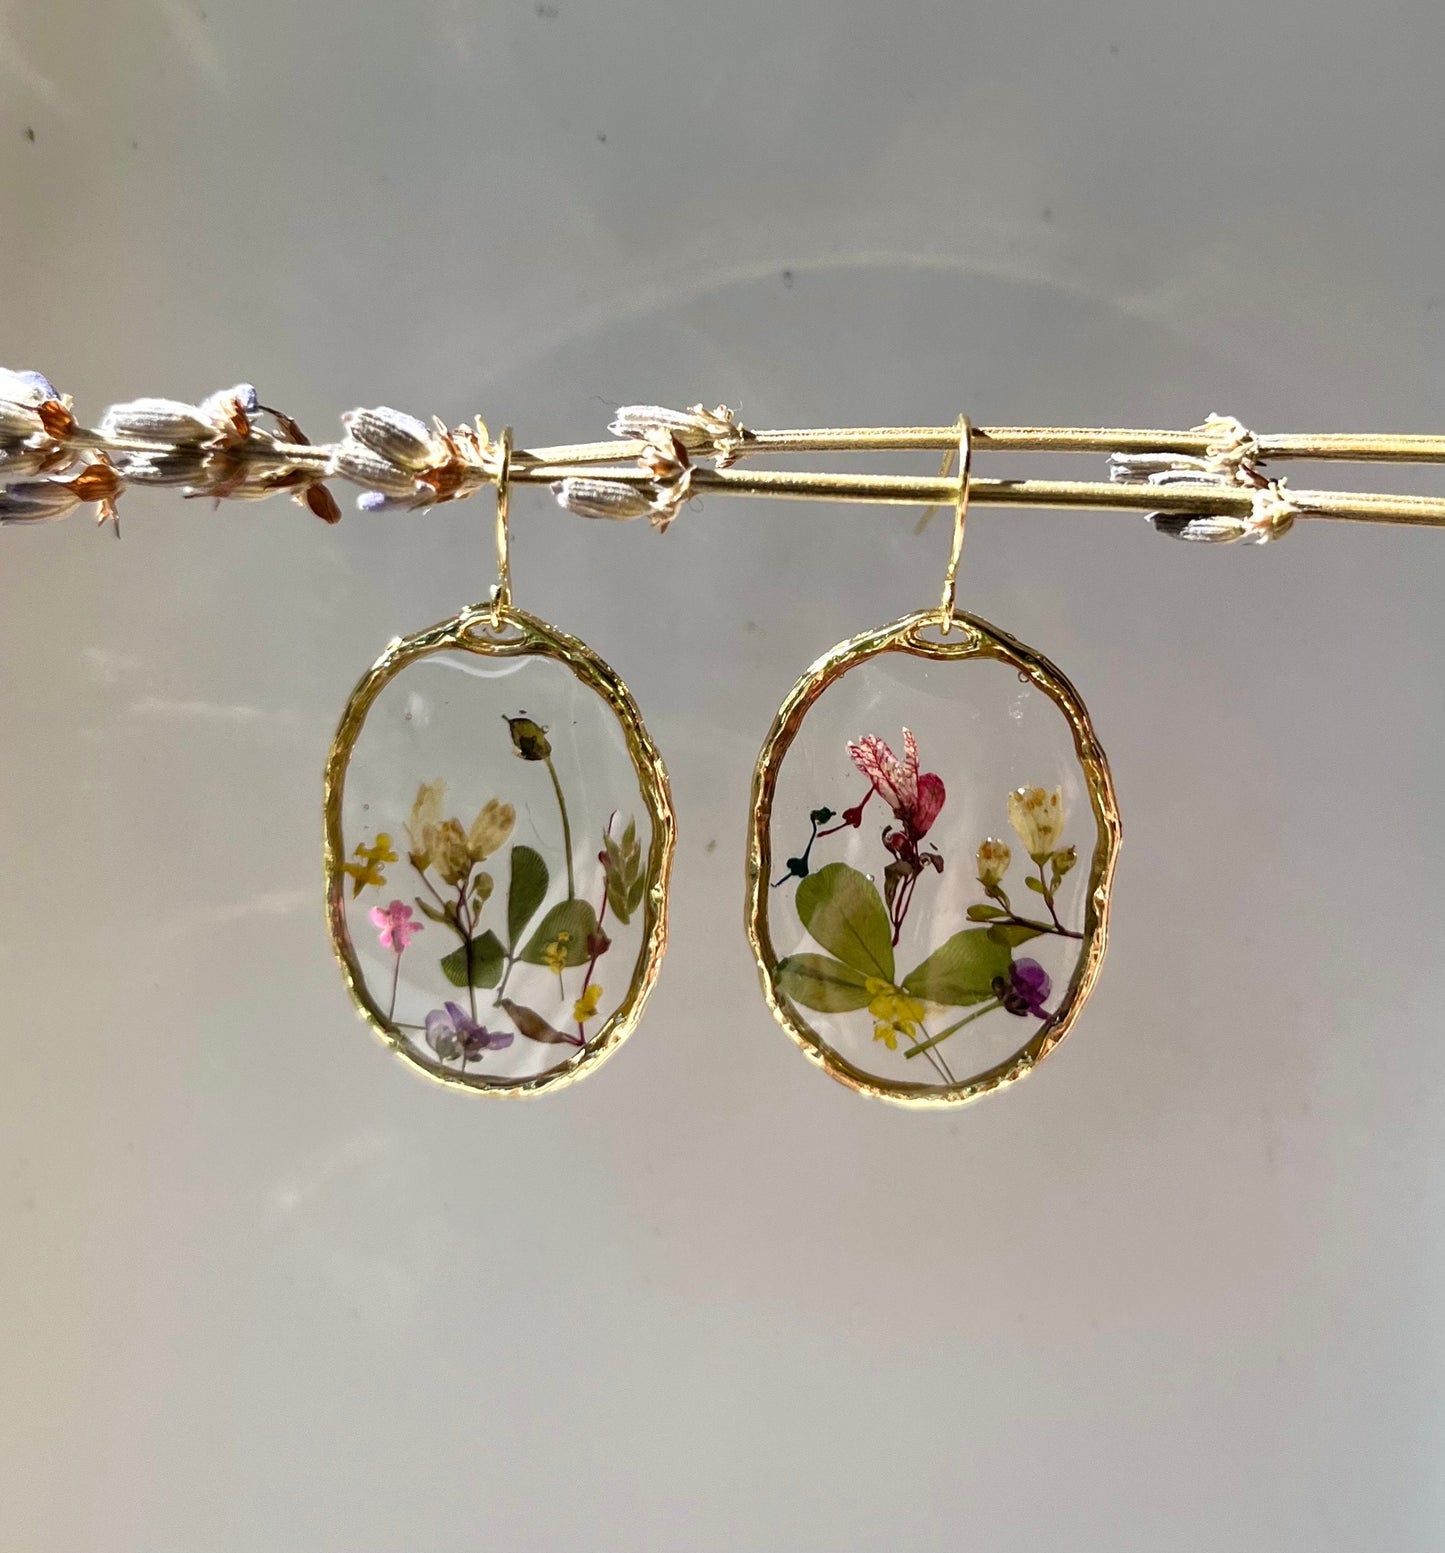 Handmade Garden Fairy Earrings. Made with pressed flowers & Ferns. Hypoallergenic Earrings. Terrarium earrings. 14K gold